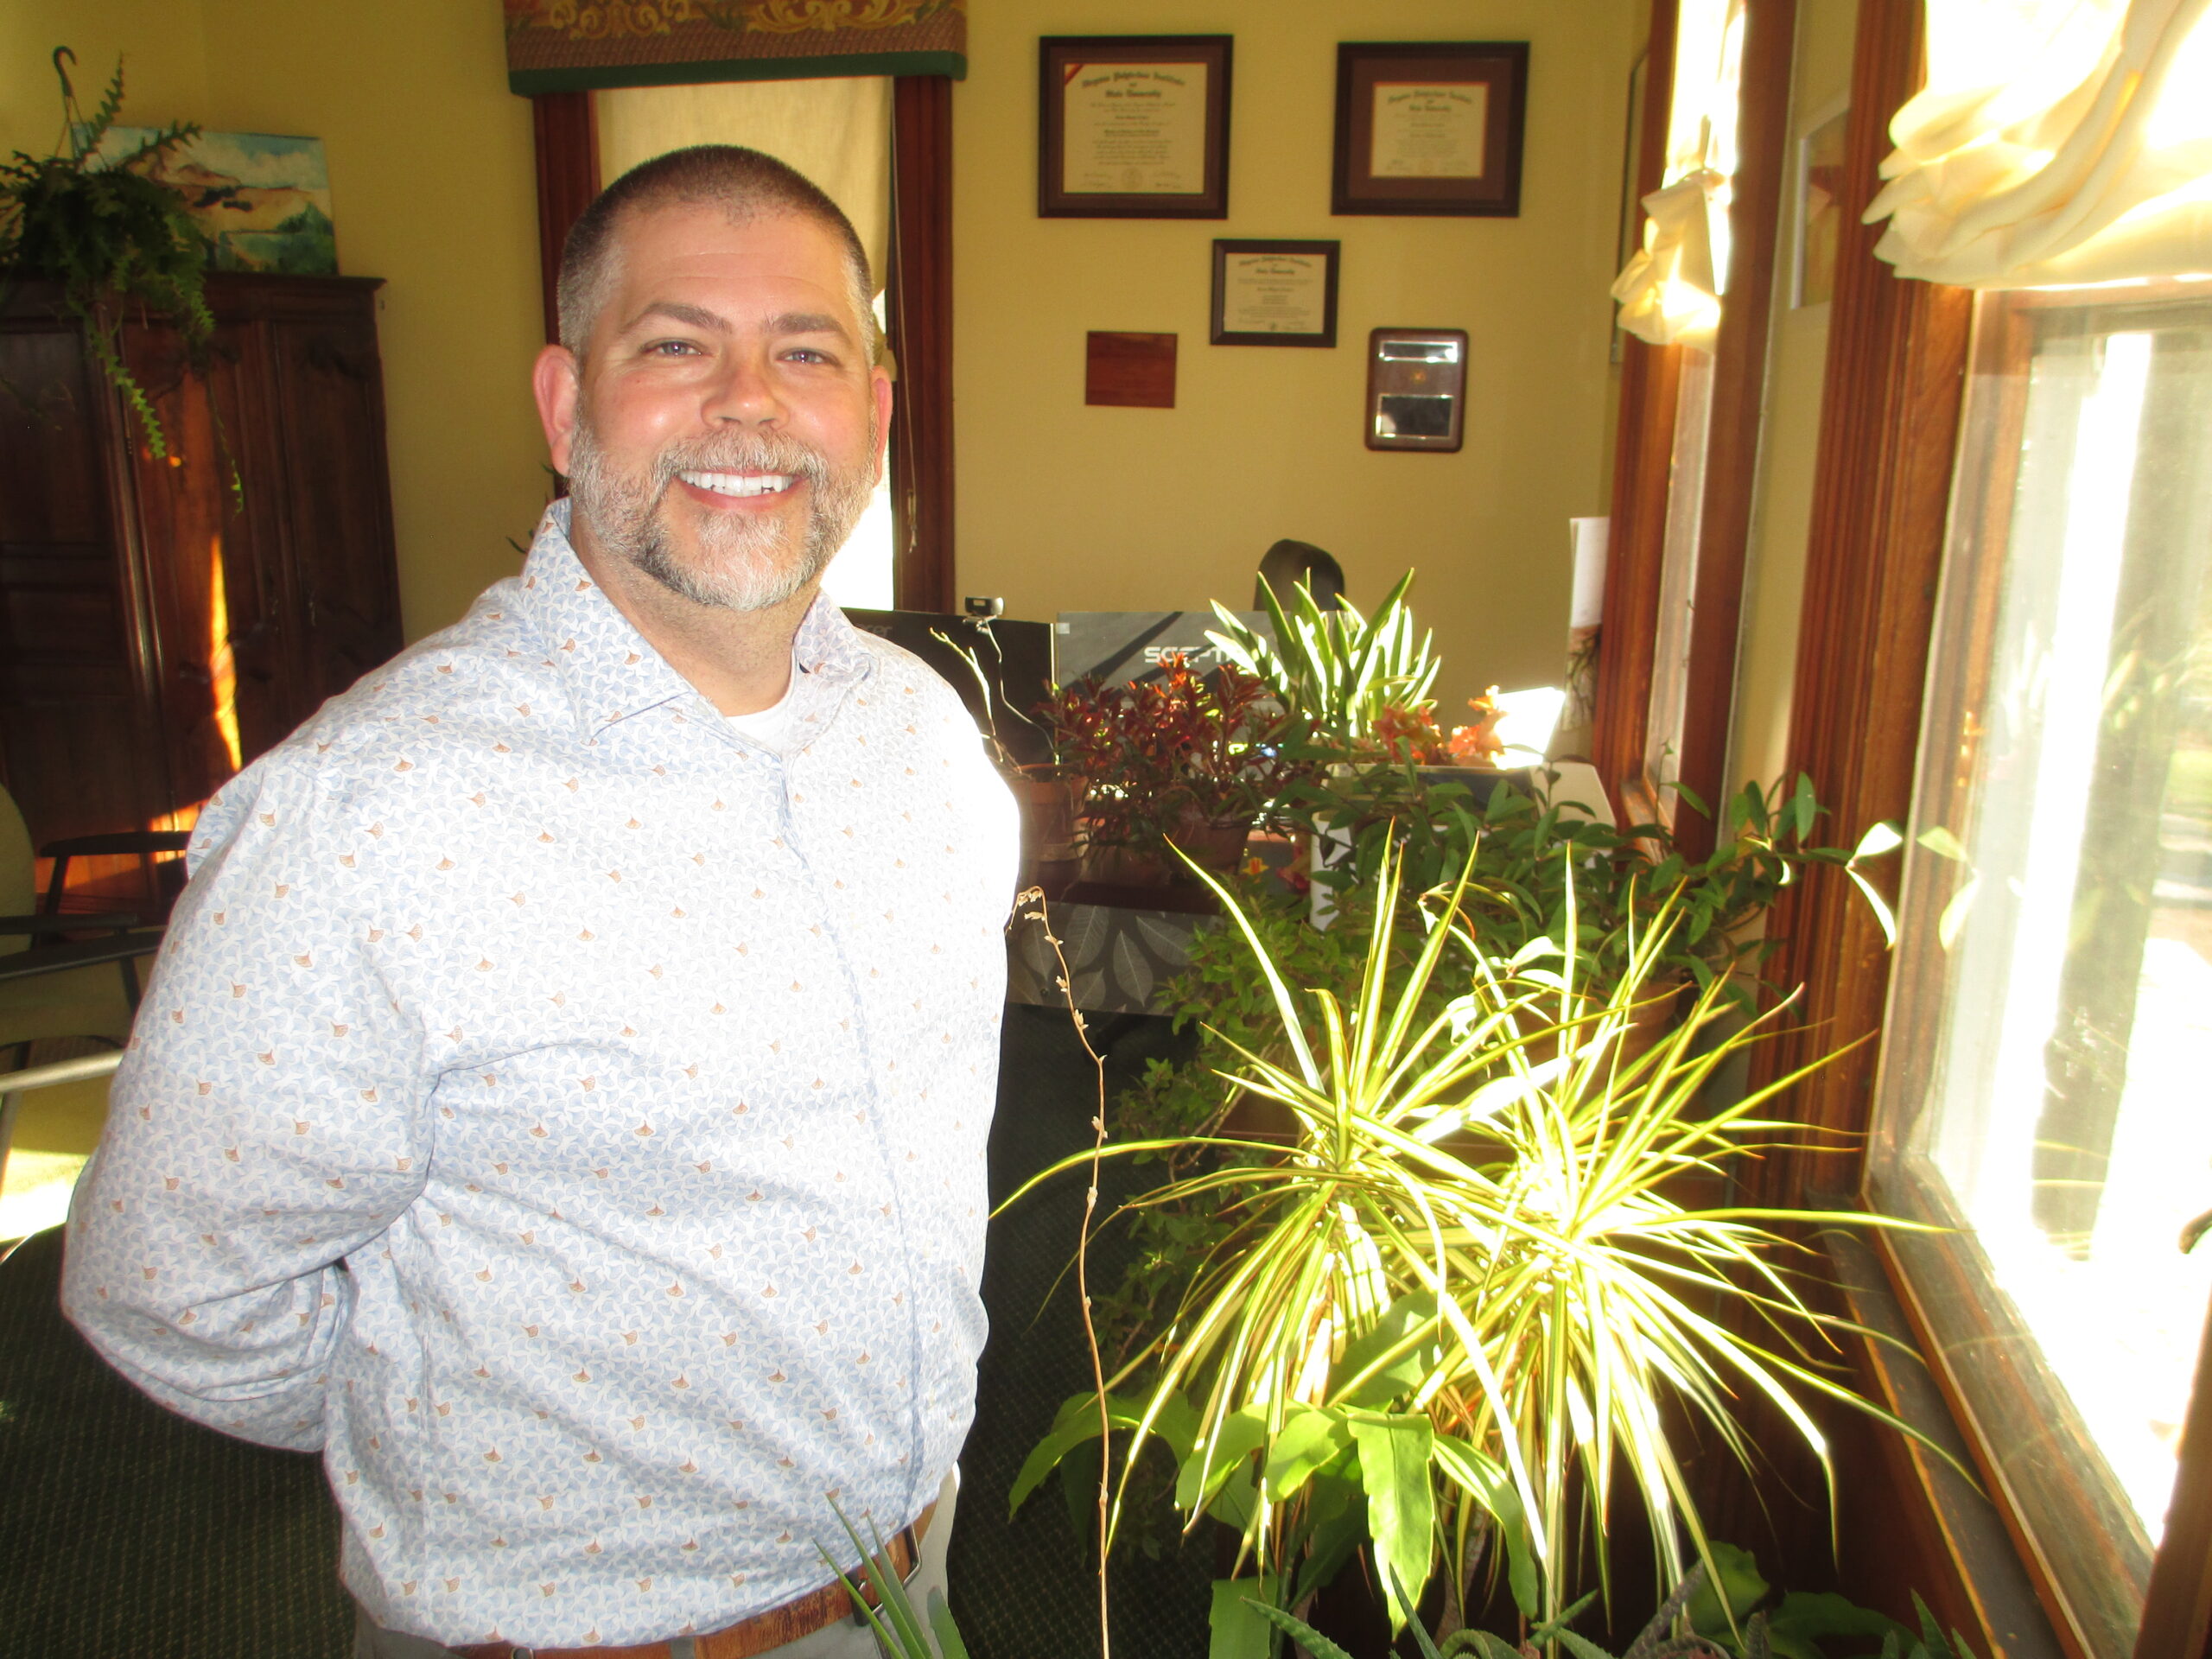 Lewis Ginter Botanical Garden CEO has a green thumb